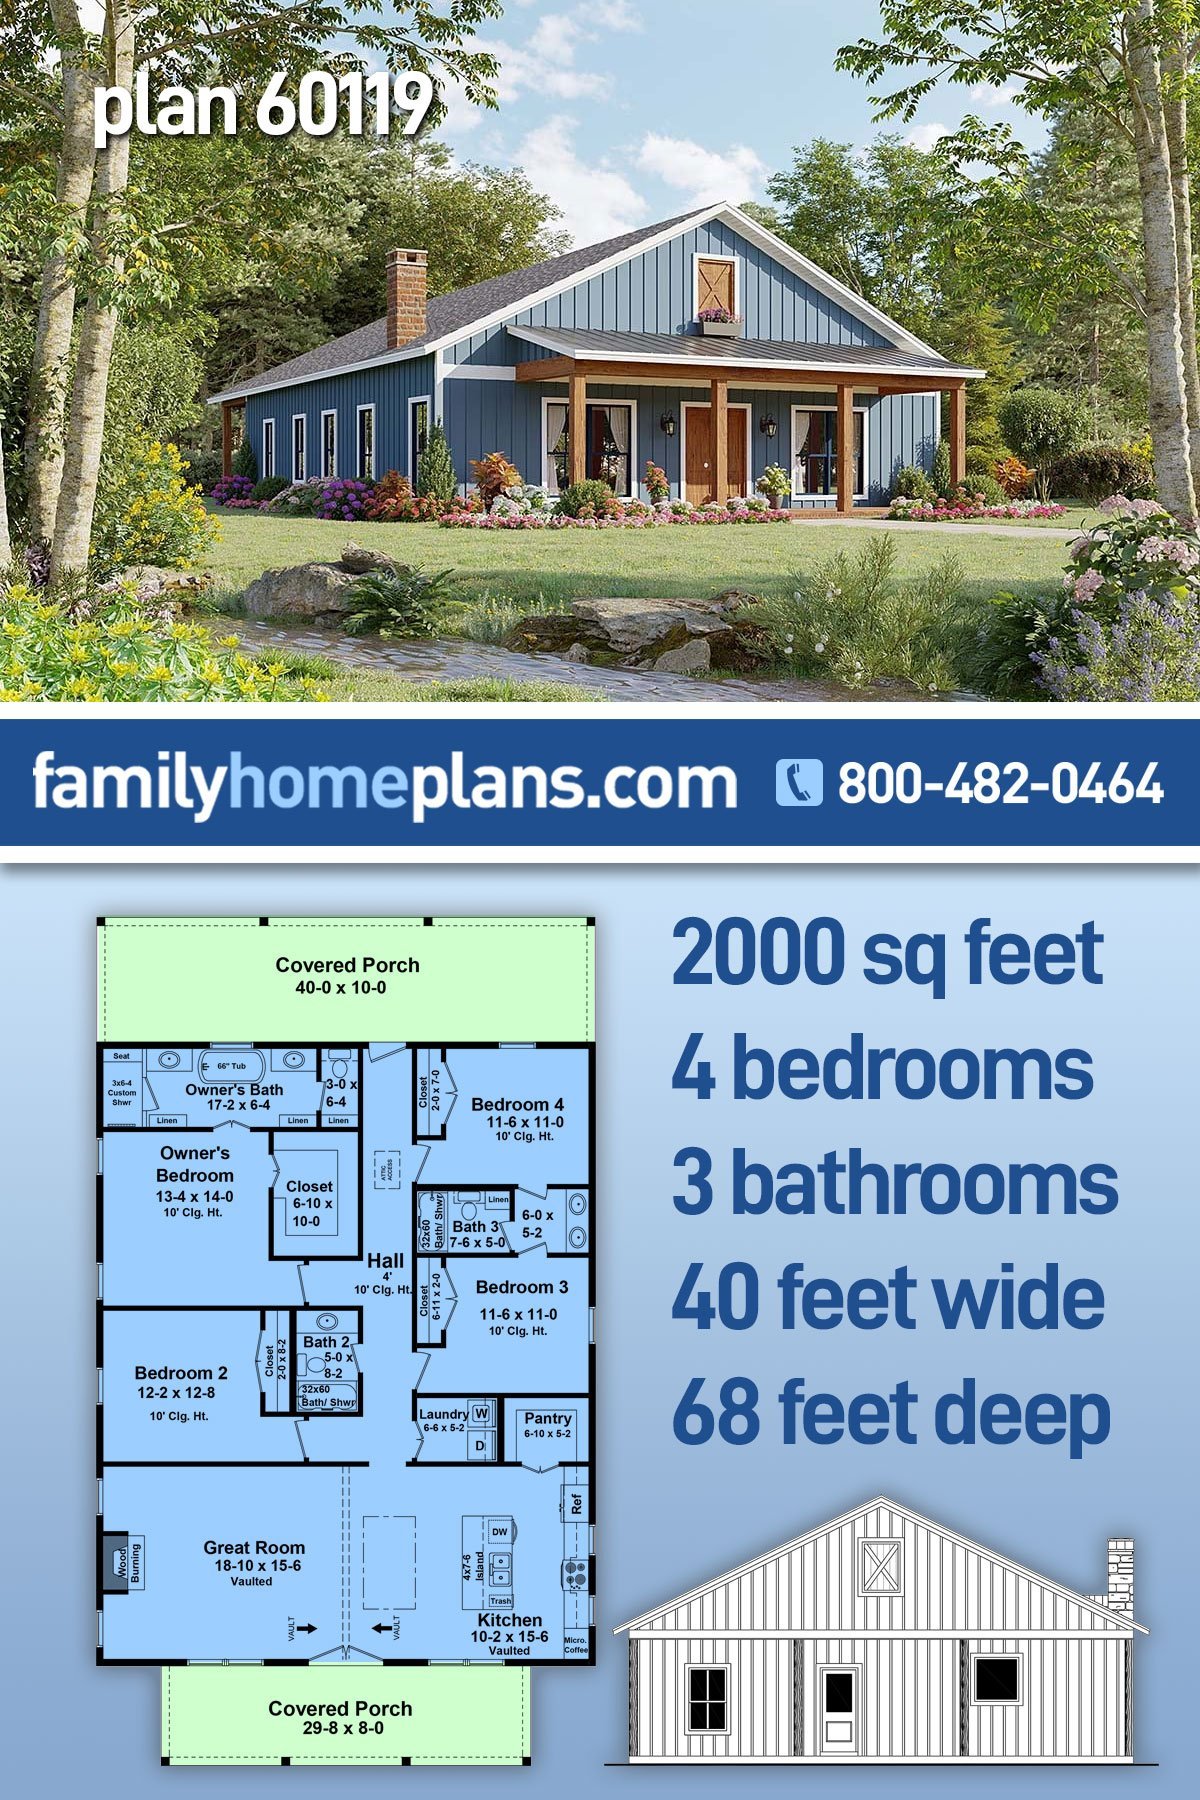 House Plan 60119